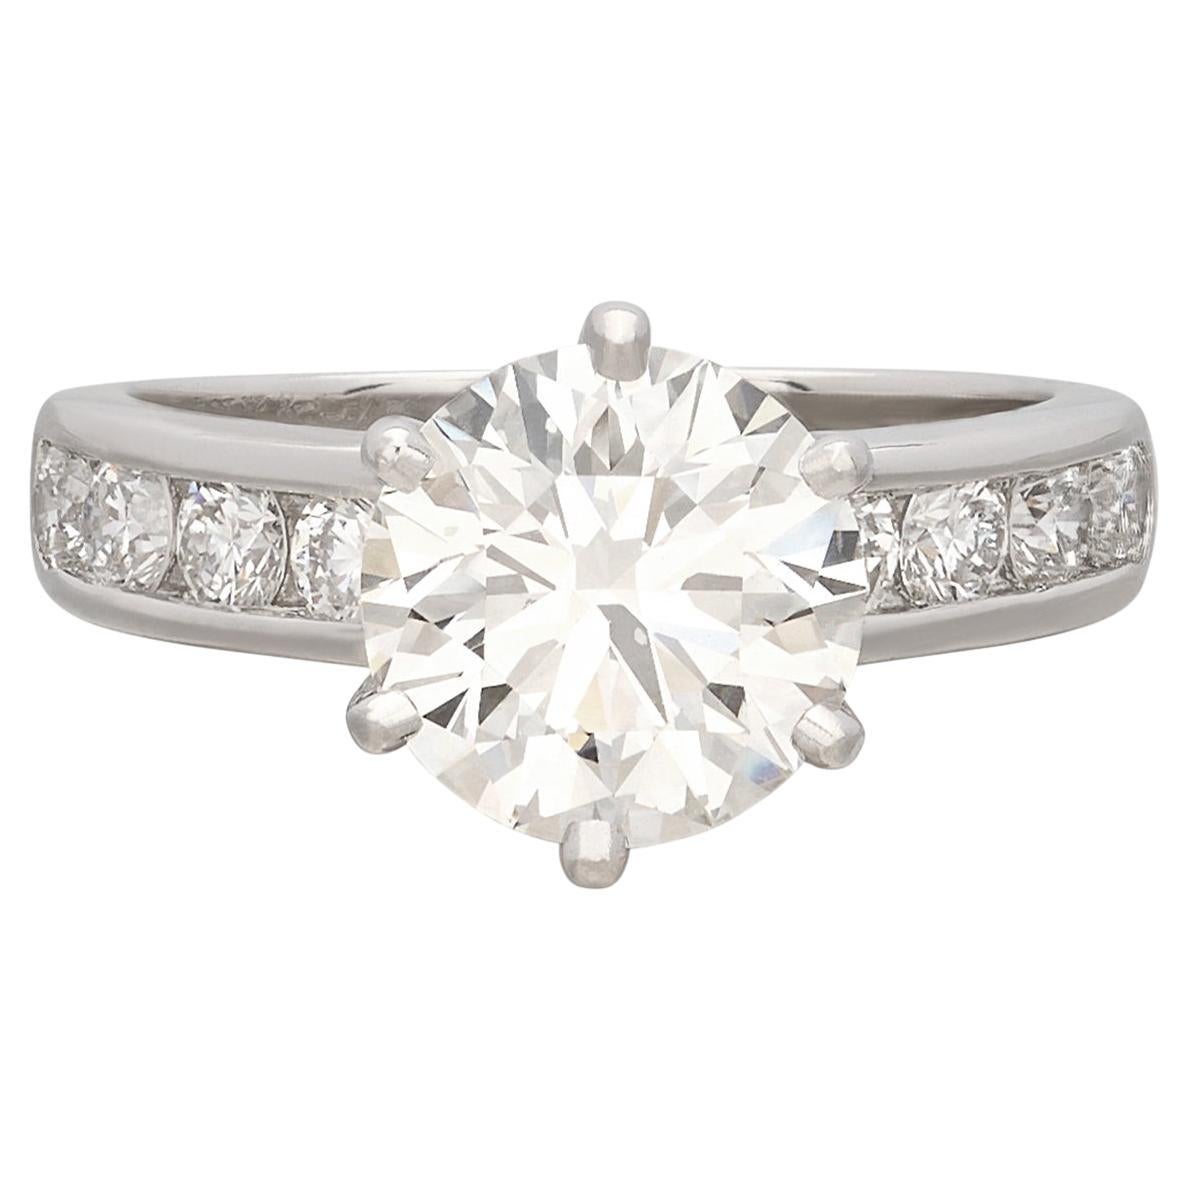 3.01 carat Diamond Platinum Ring by Tiffany & Co.